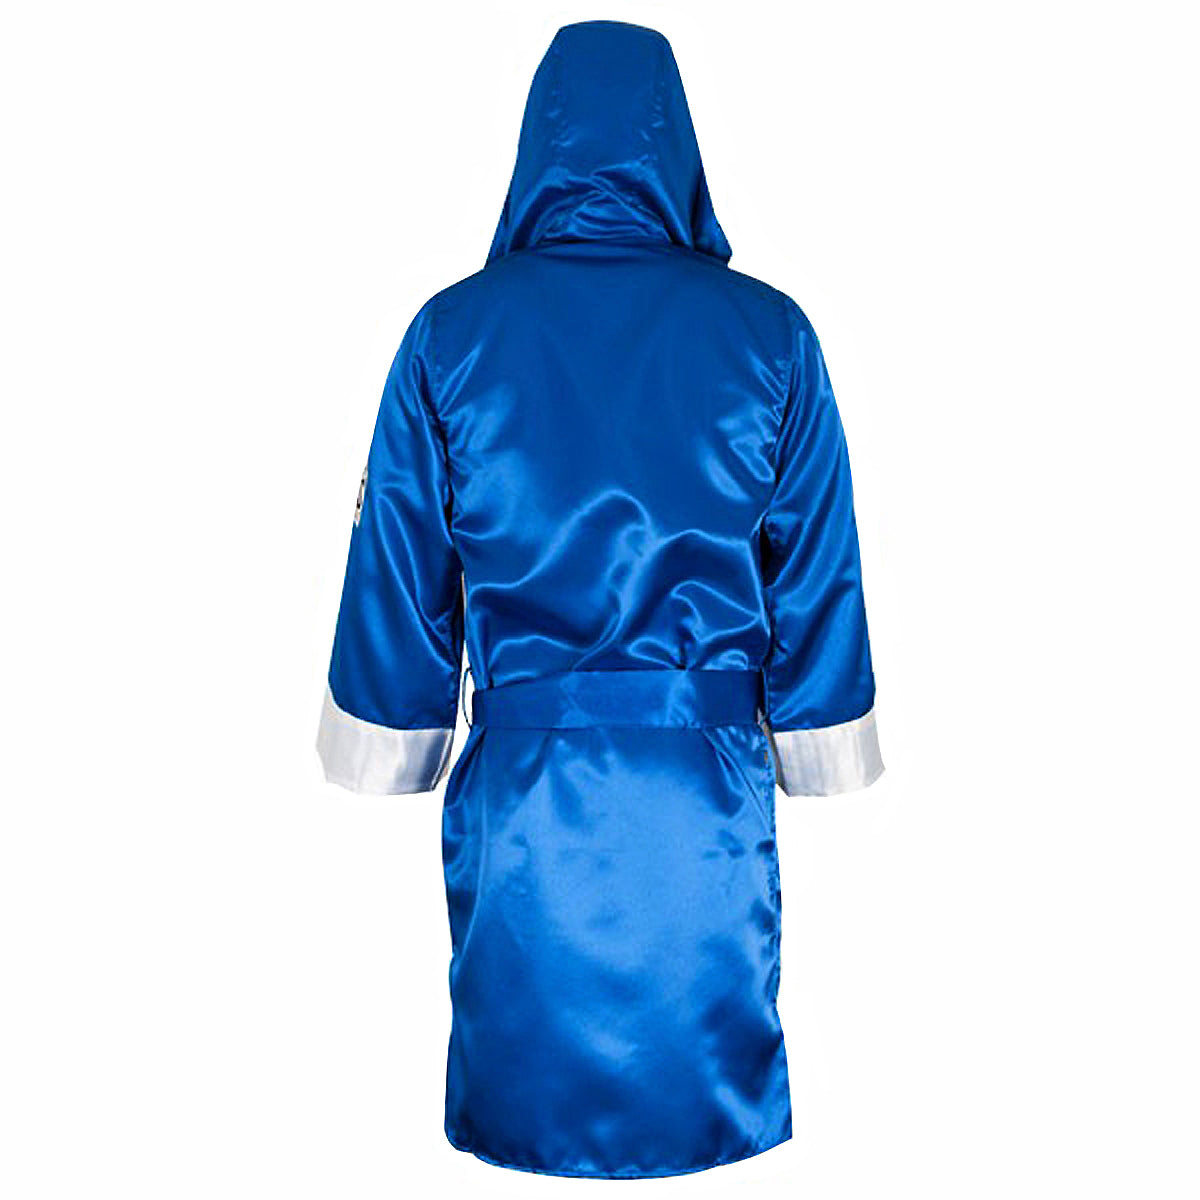 Cleto Reyes Satin Boxing Robe with Hood - Large - Blue/White Cleto Reyes